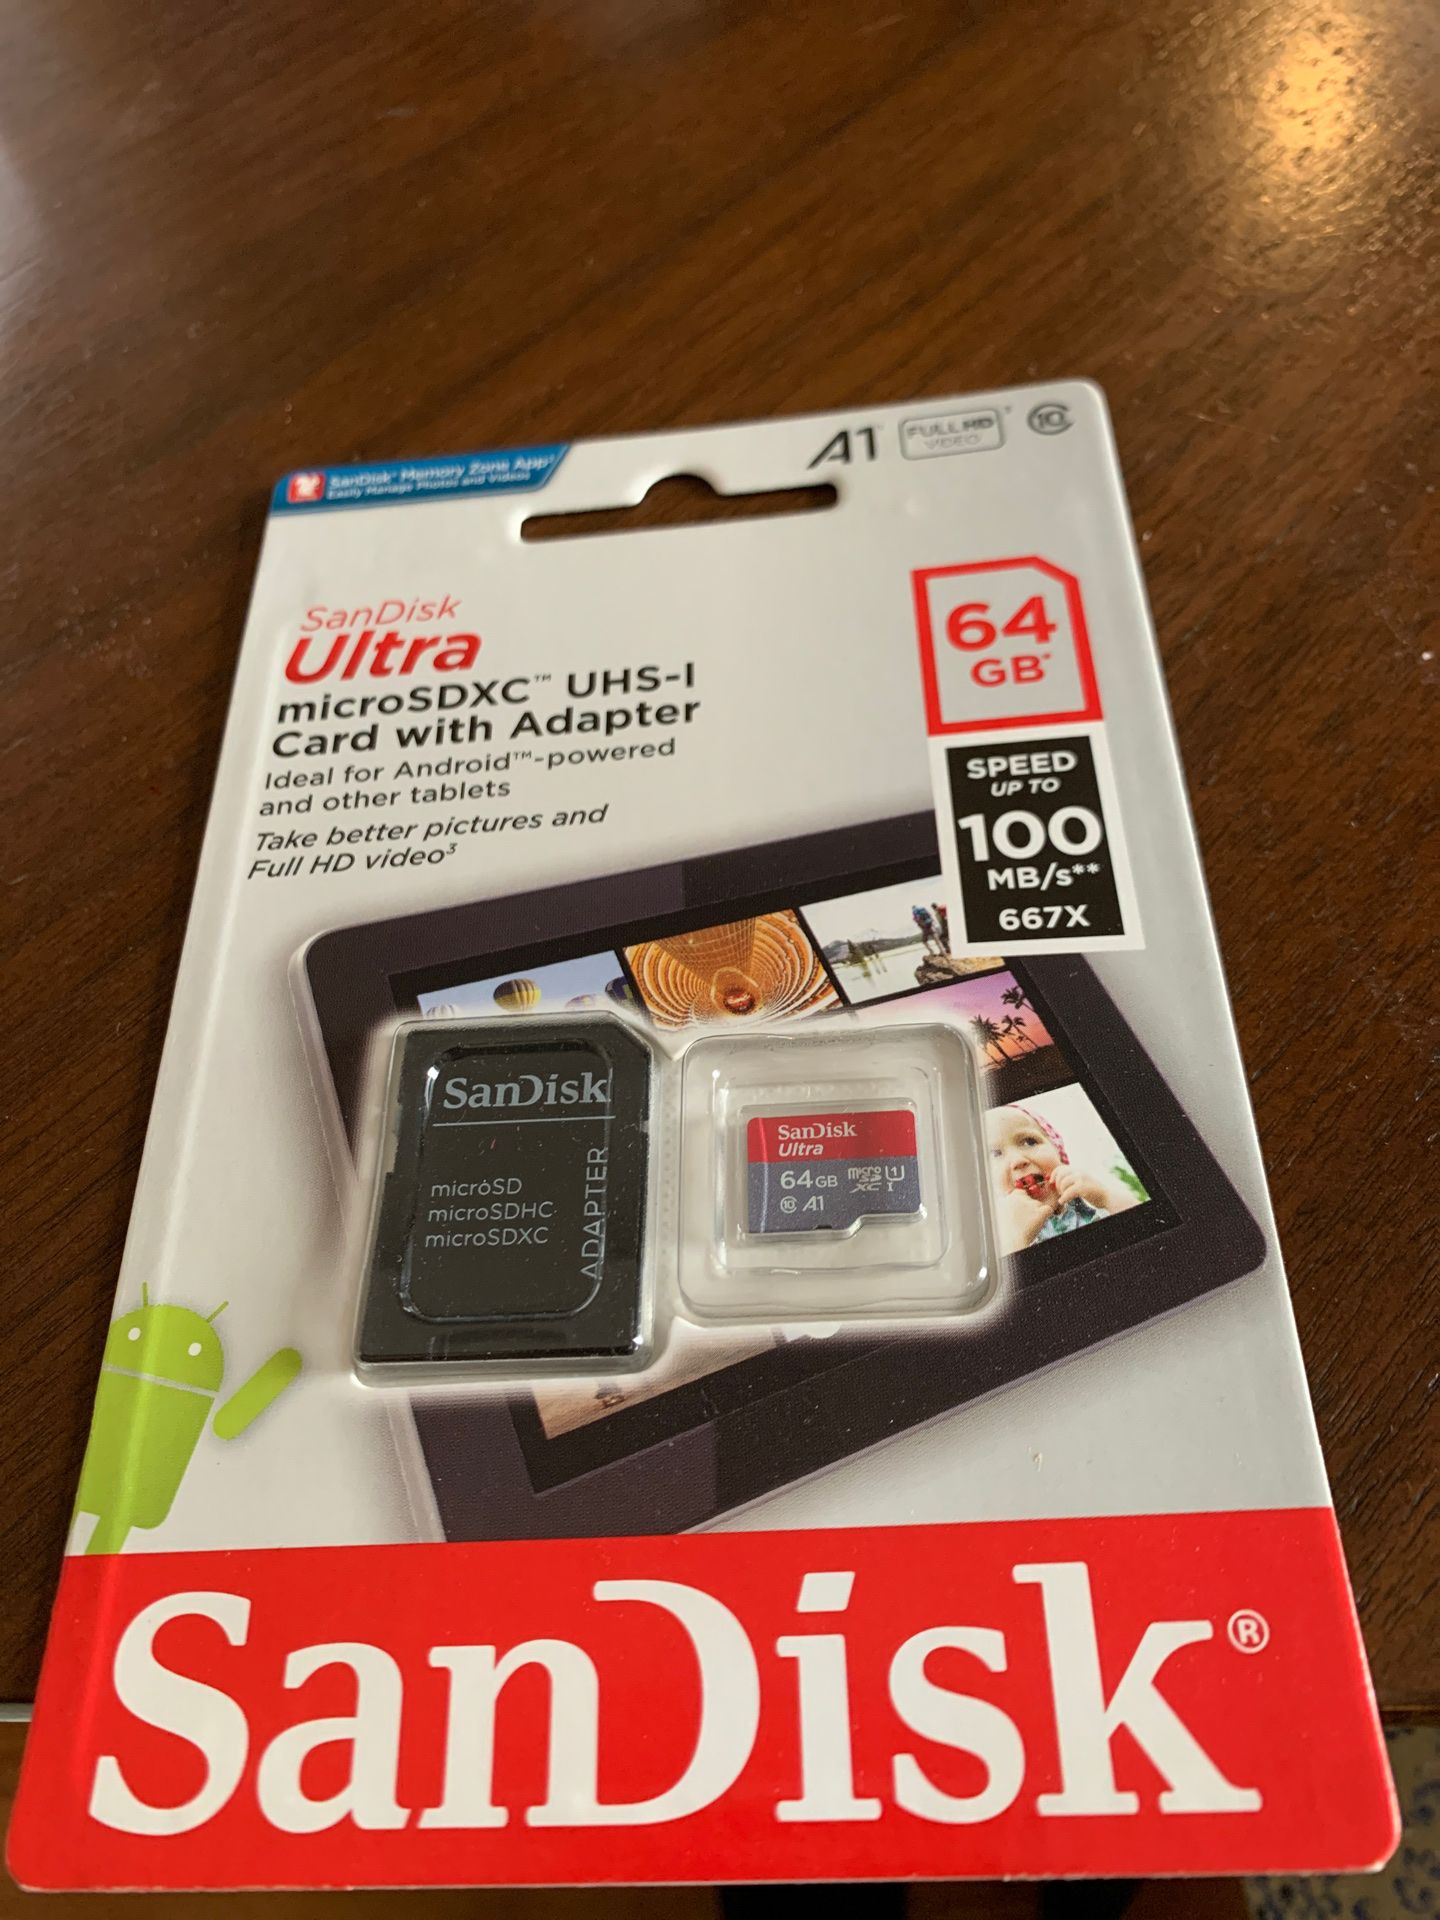 Sandusky 64gb ultra microSDXC UHS-I card with adapter